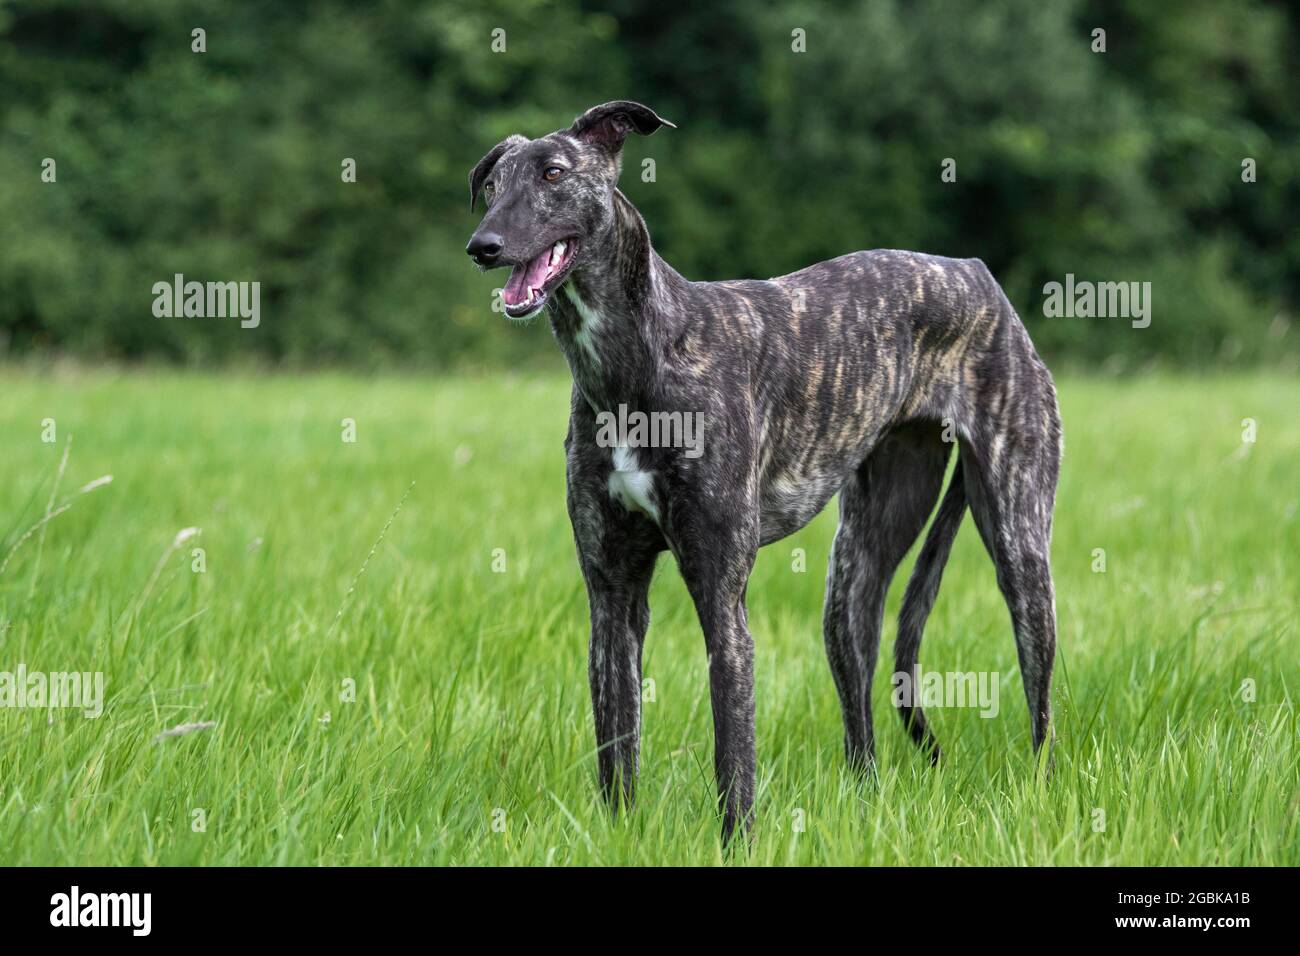 Brindled rough-coated Galgo Español / barcino Spanish galgo / atigrado Spanish sighthound, dog breed of the sighthounds in field Stock Photo